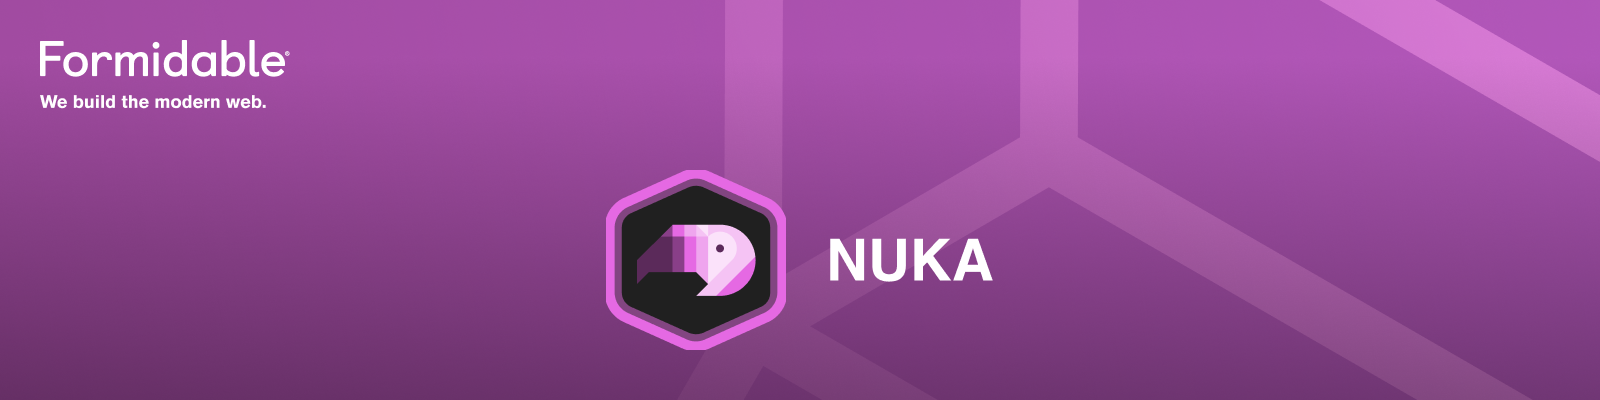 Nuka Carousel — Formidable, We build the modern web